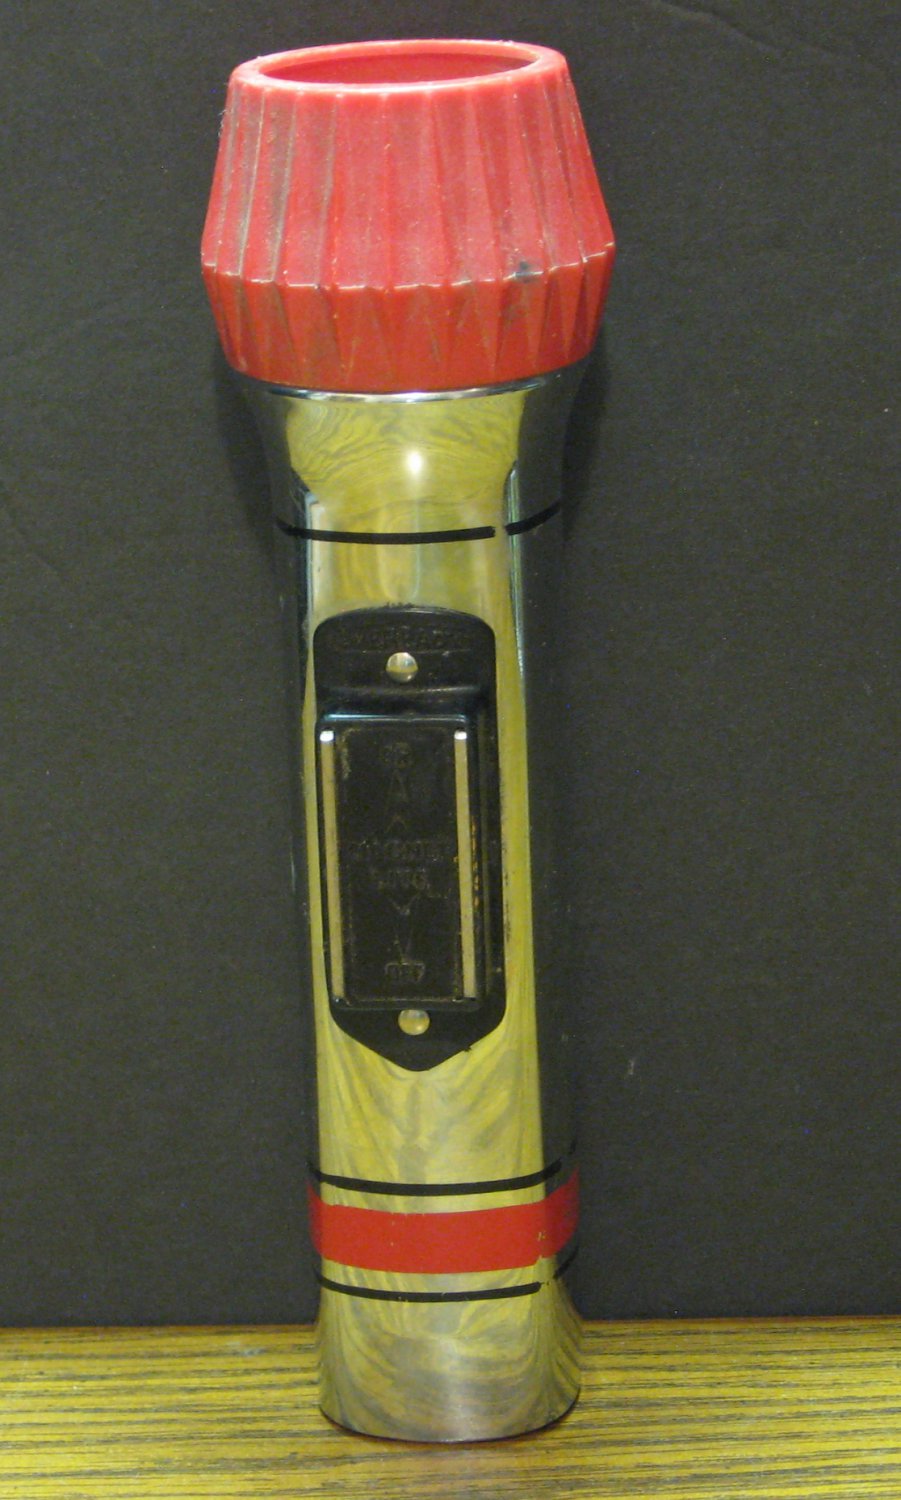 Flashlight - Eveready Magnet Lite Magnetic - Chrome / Red Plastic - 7 1/2" - 1957 Vintage